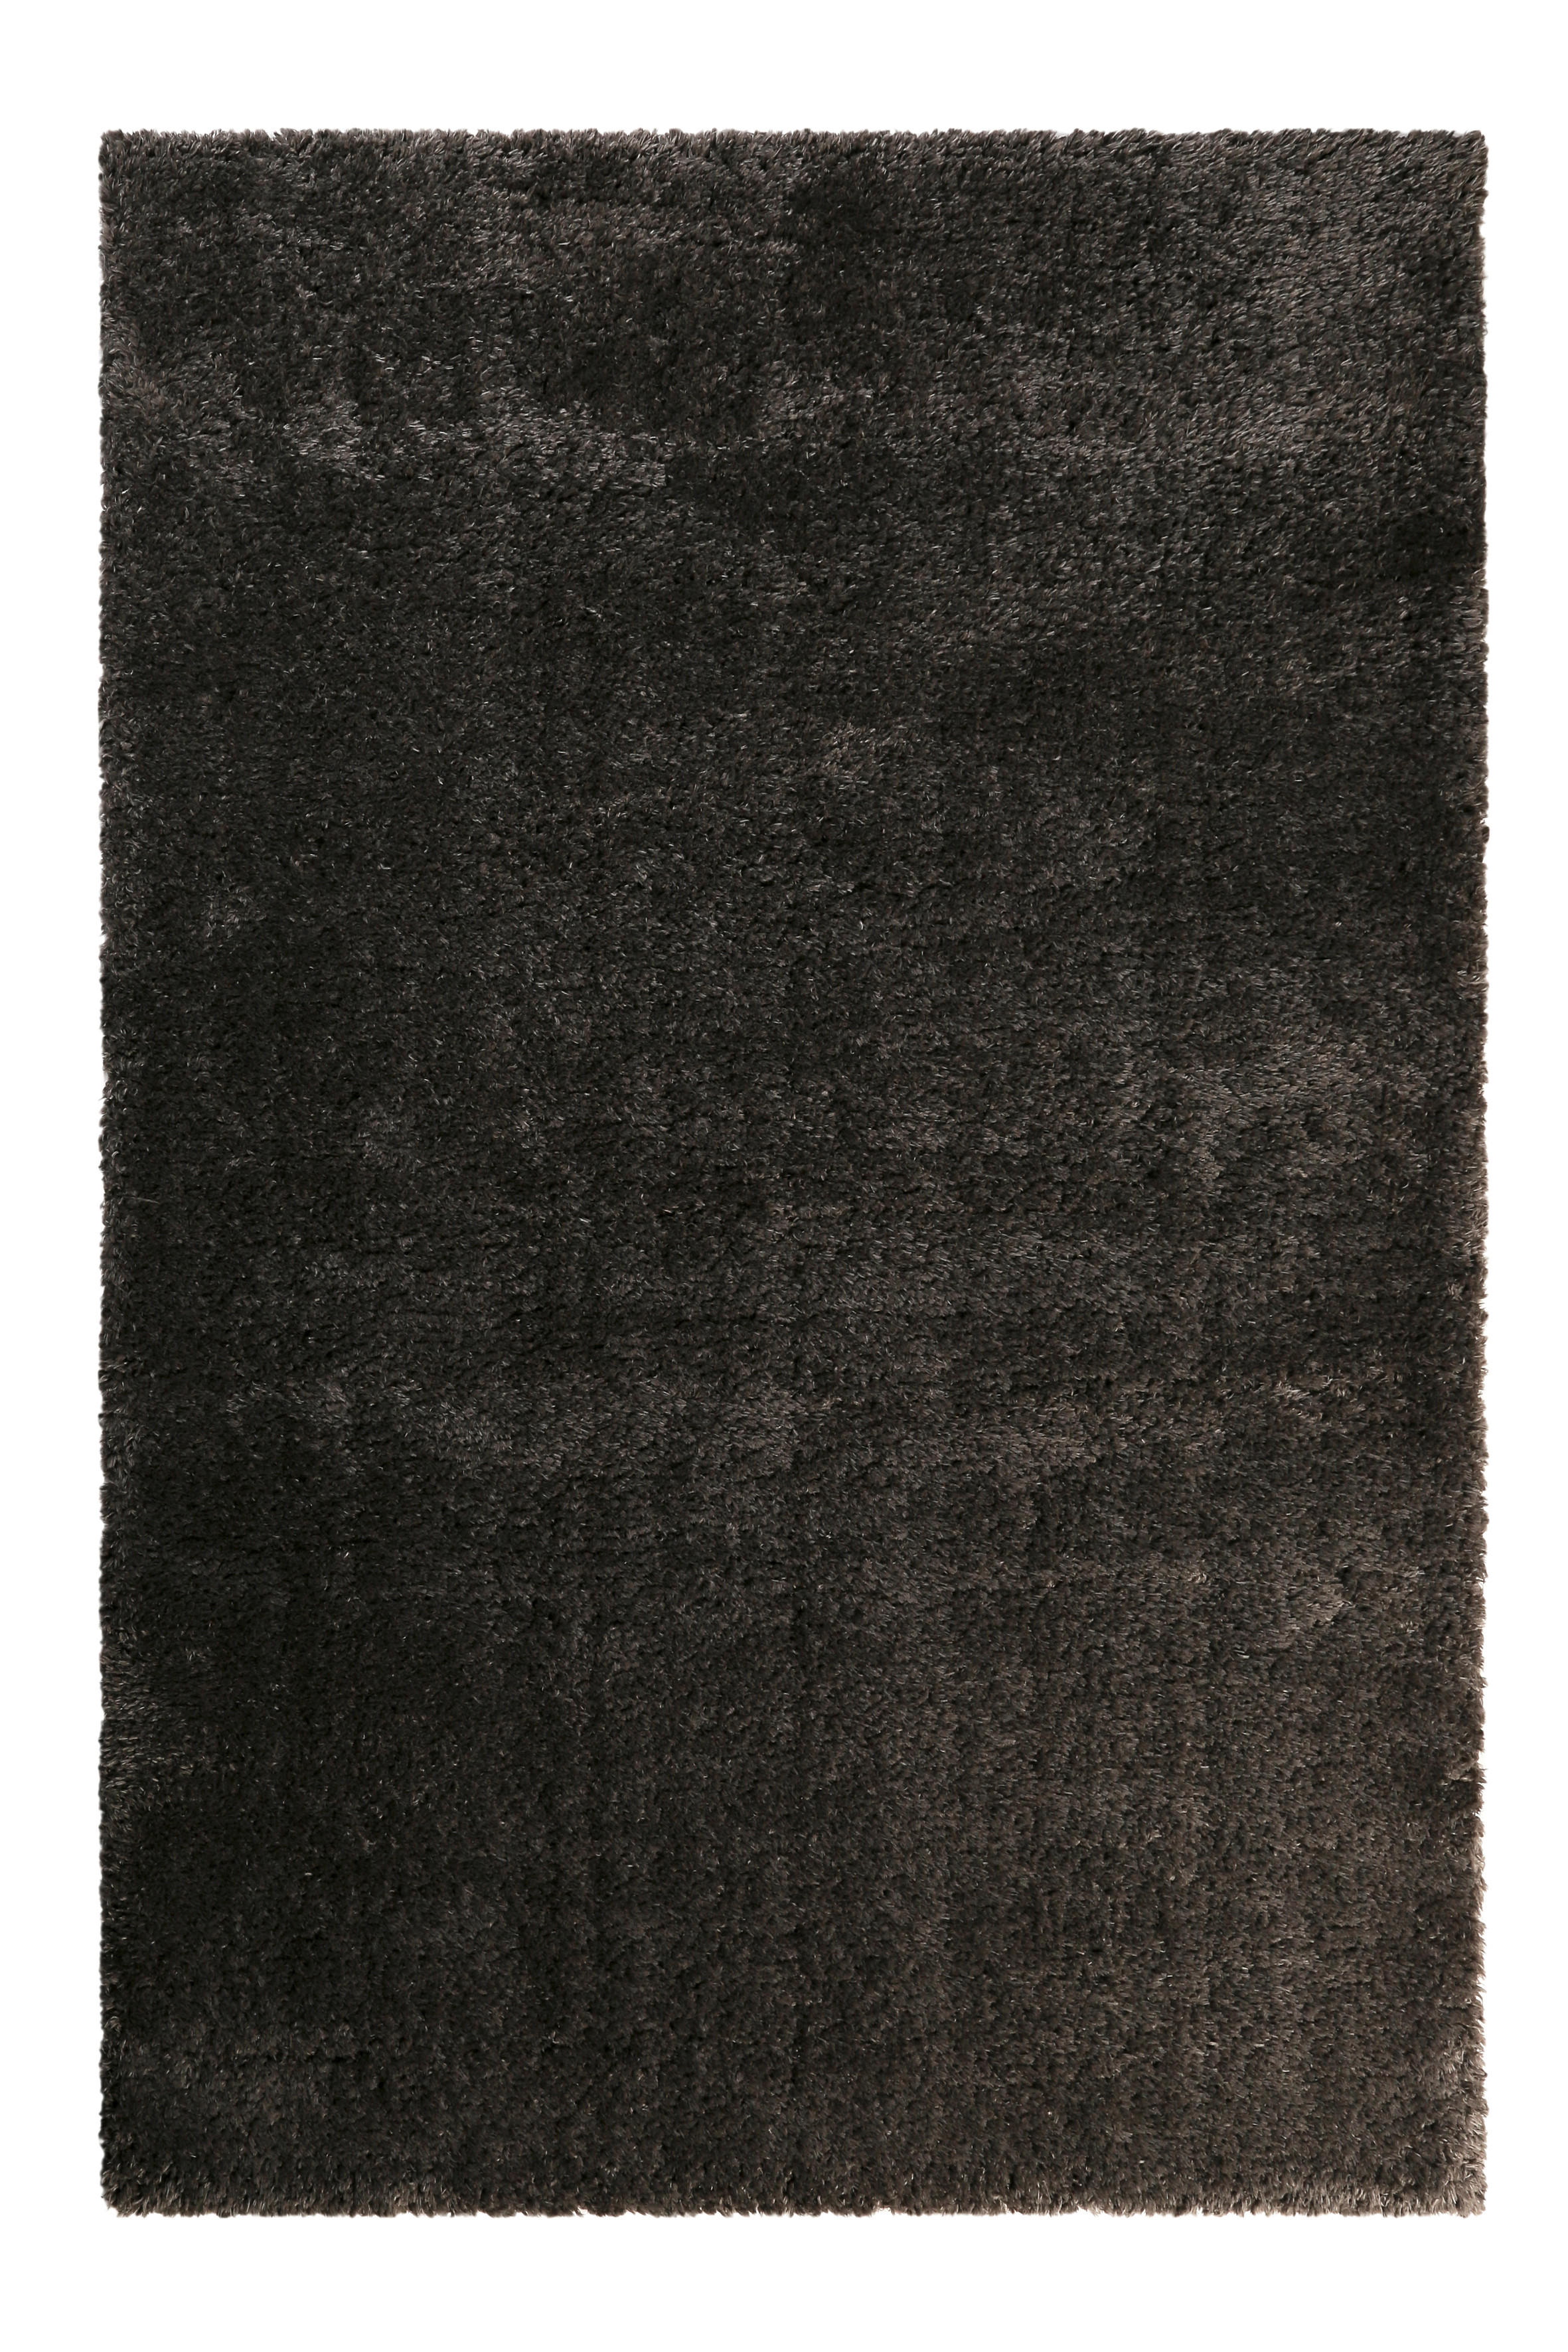 HOCHFLORTEPPICH 120/170 cm Toubkal  - Anthrazit, Design, Textil (120/170cm) - Novel